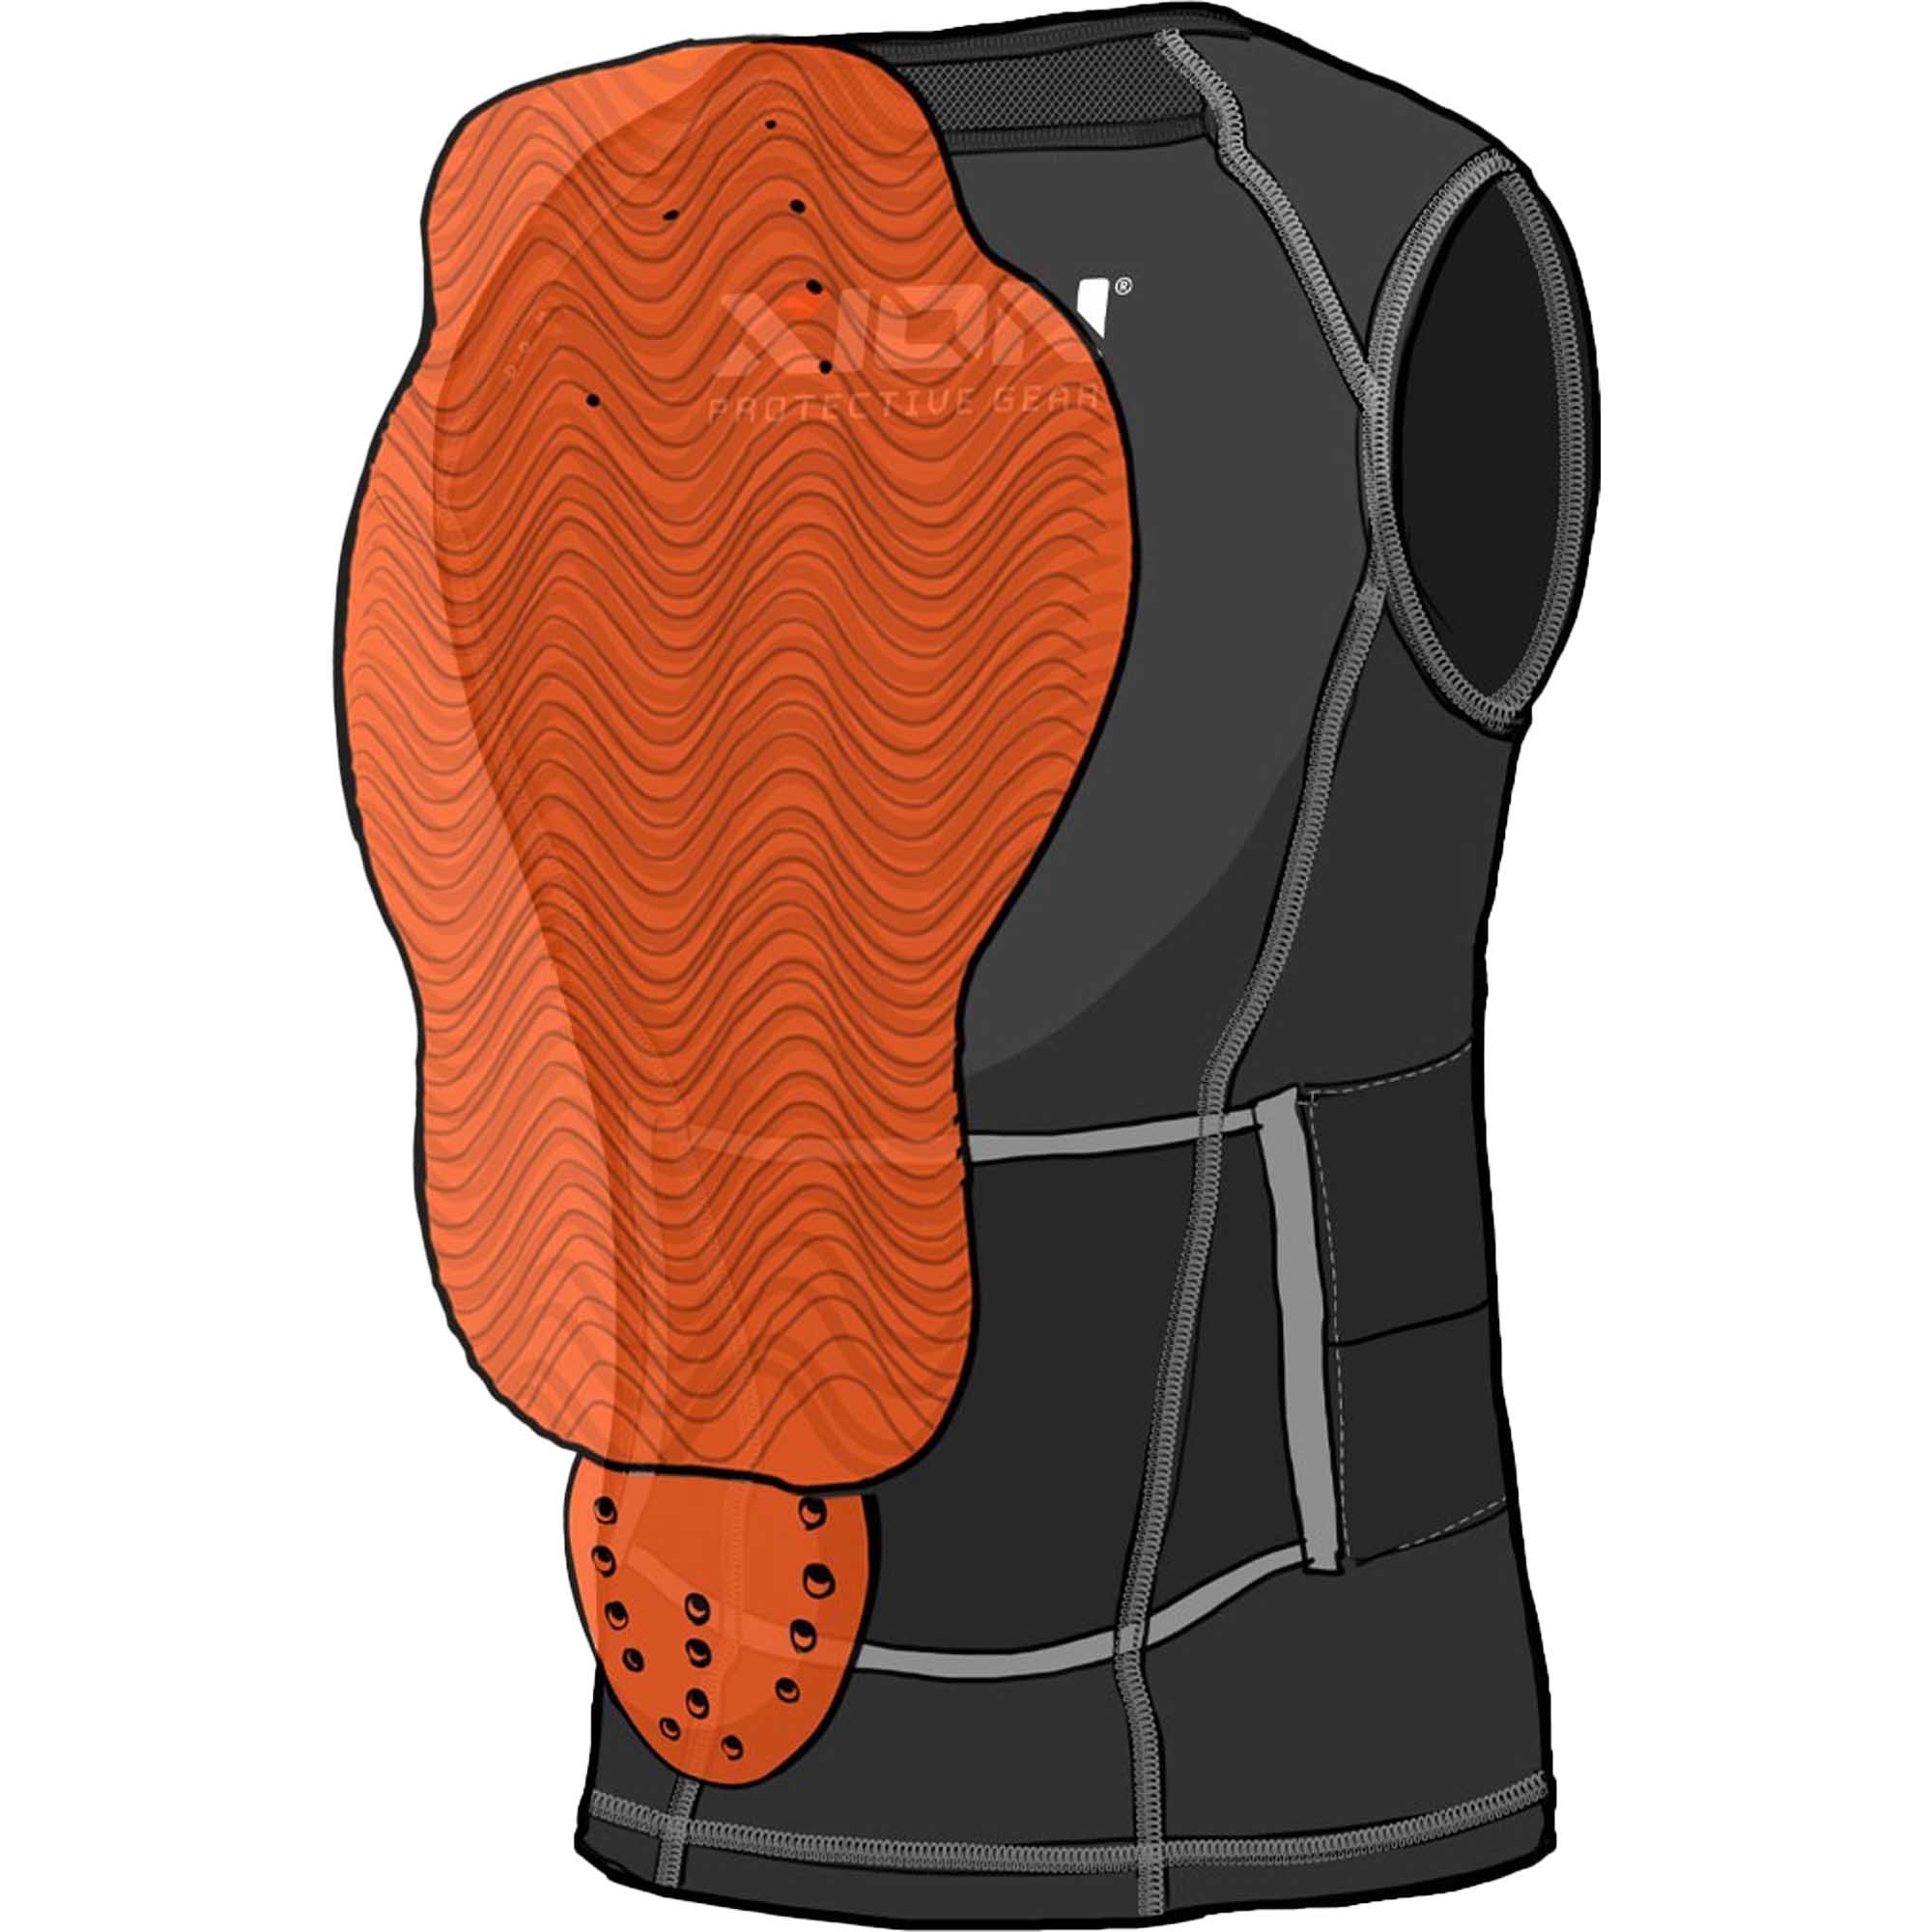 Xion Nosleeve Freeride V1 D3O Ski/Snowboard Body Armour Vest